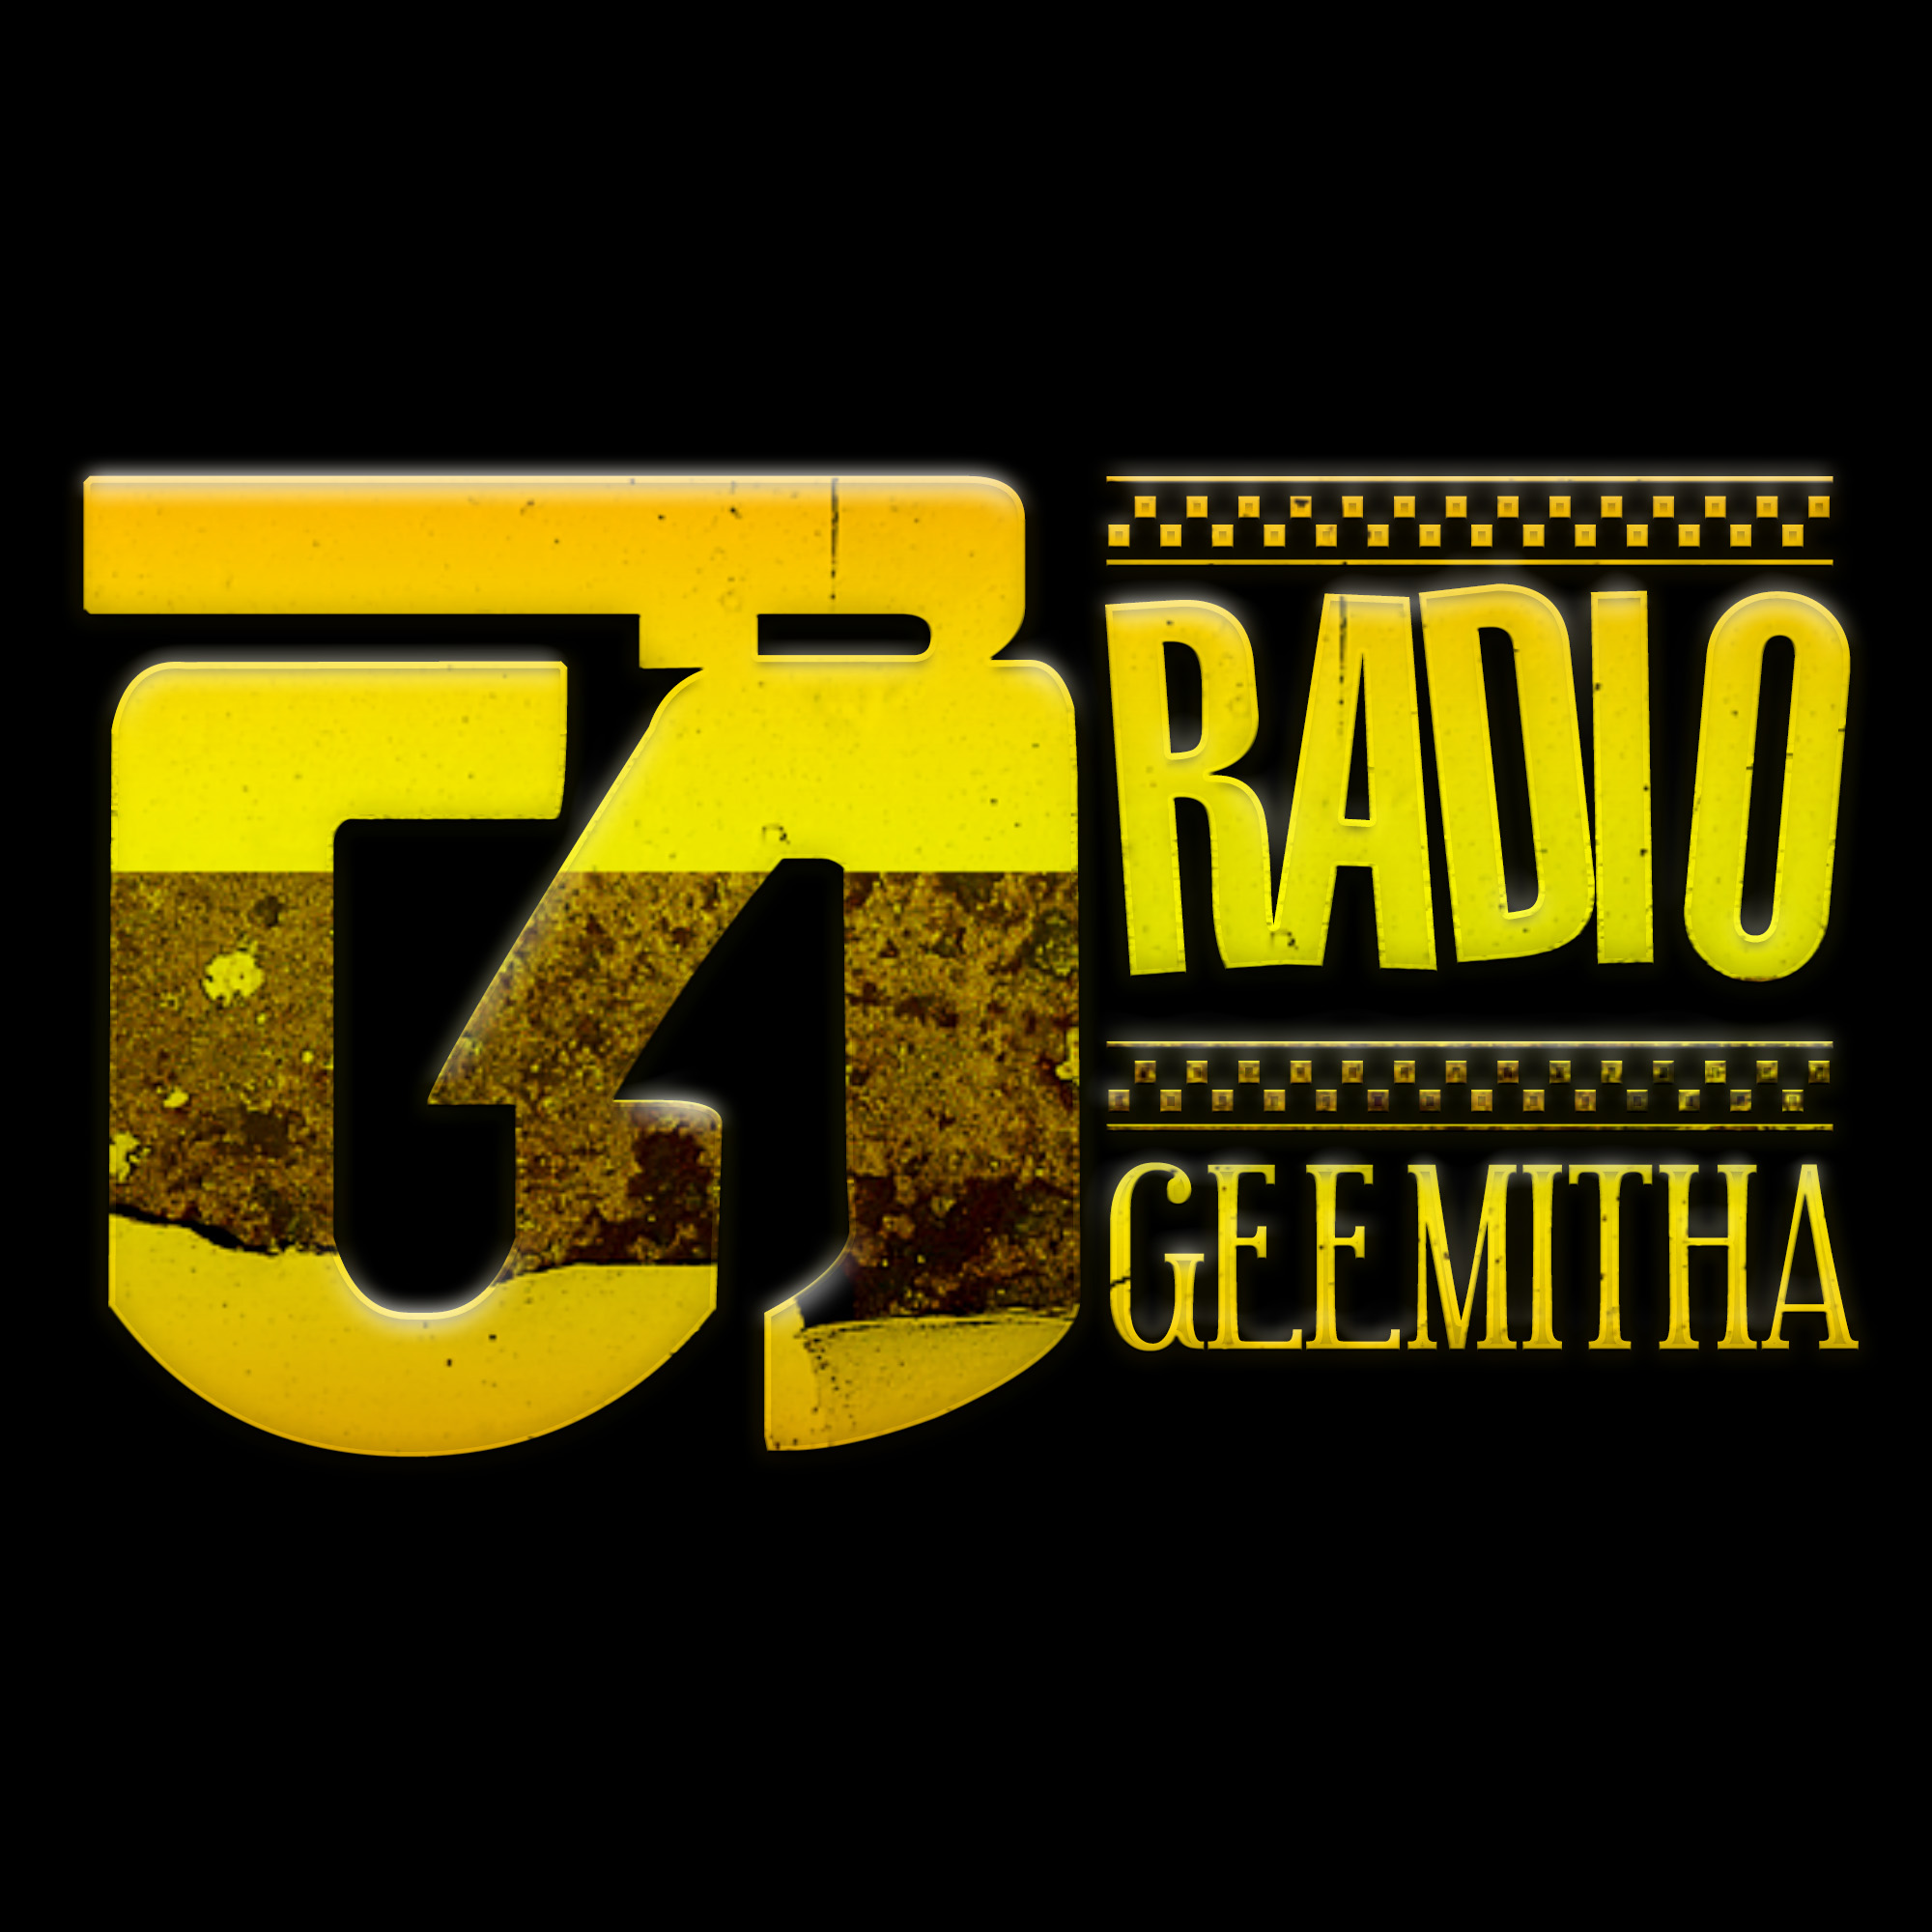 Geemitha Radio:  Listen to new Sinhala songs 24/7.